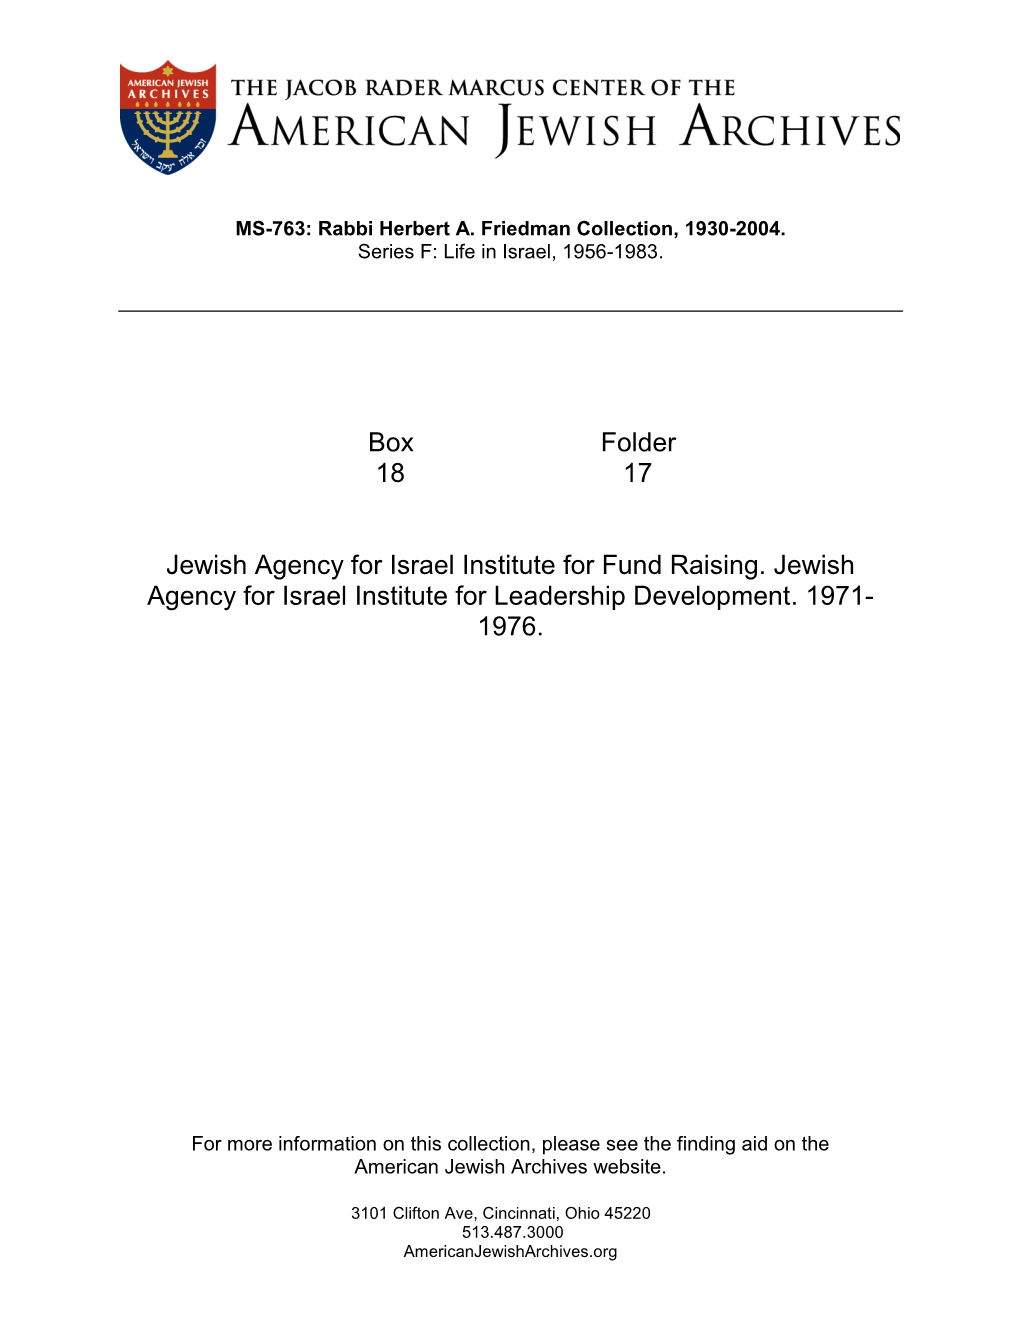 Box Folder 18 17 Jewish Agency for Israel Institute for Fund Raising